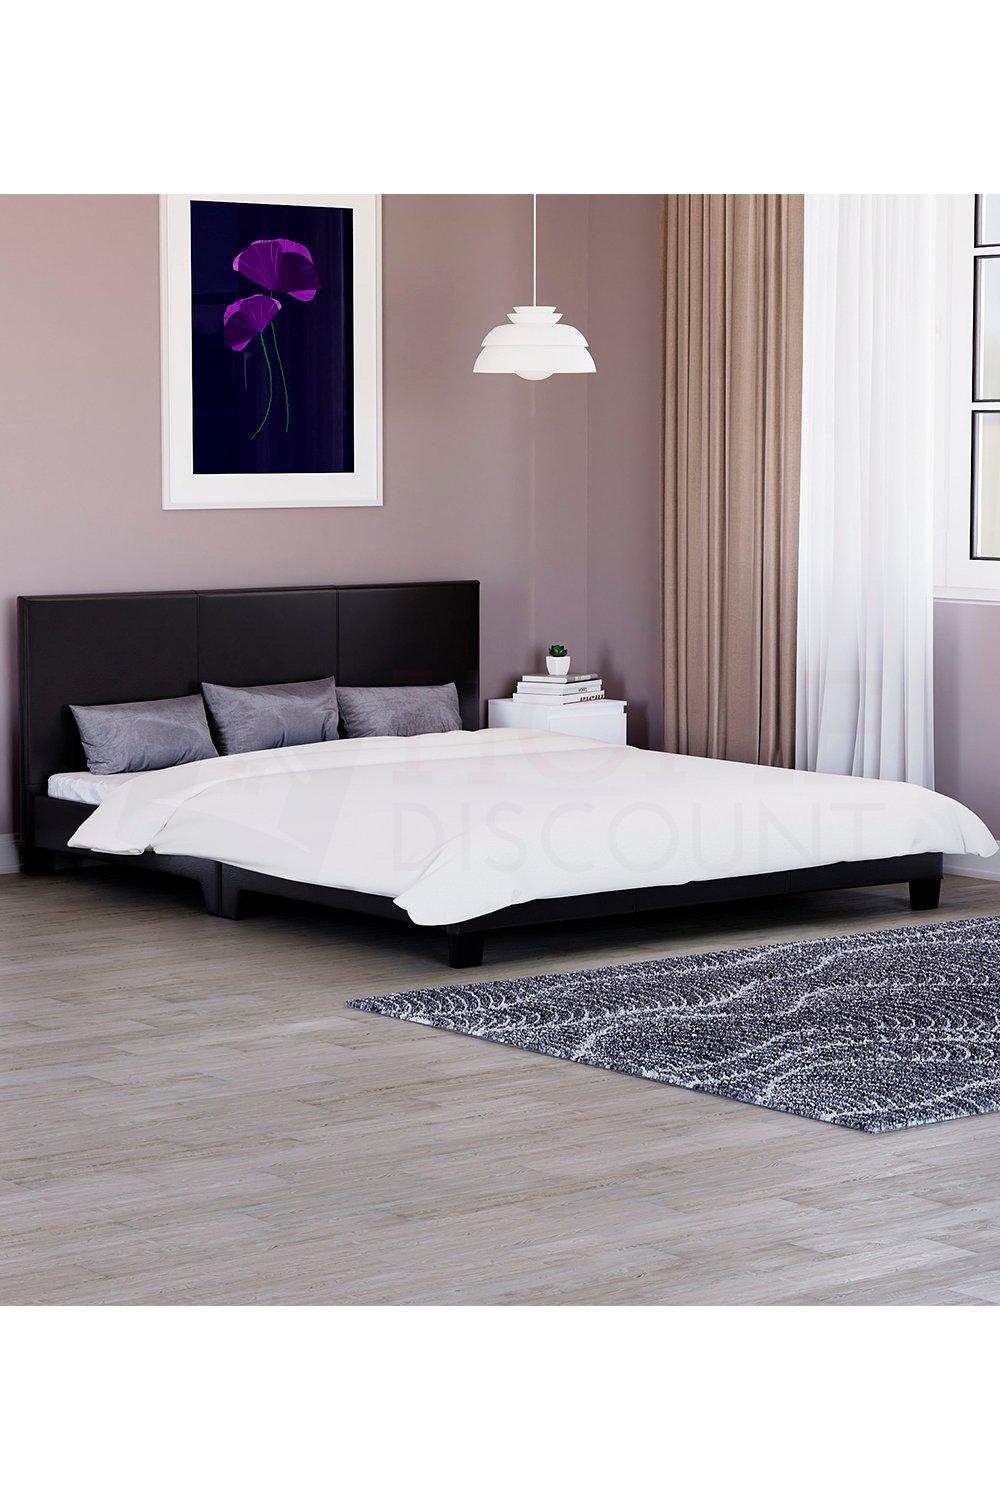 Vida Designs Lisbon King Size Faux Leather Bed Frame 770 x 1550 x 2080 mm